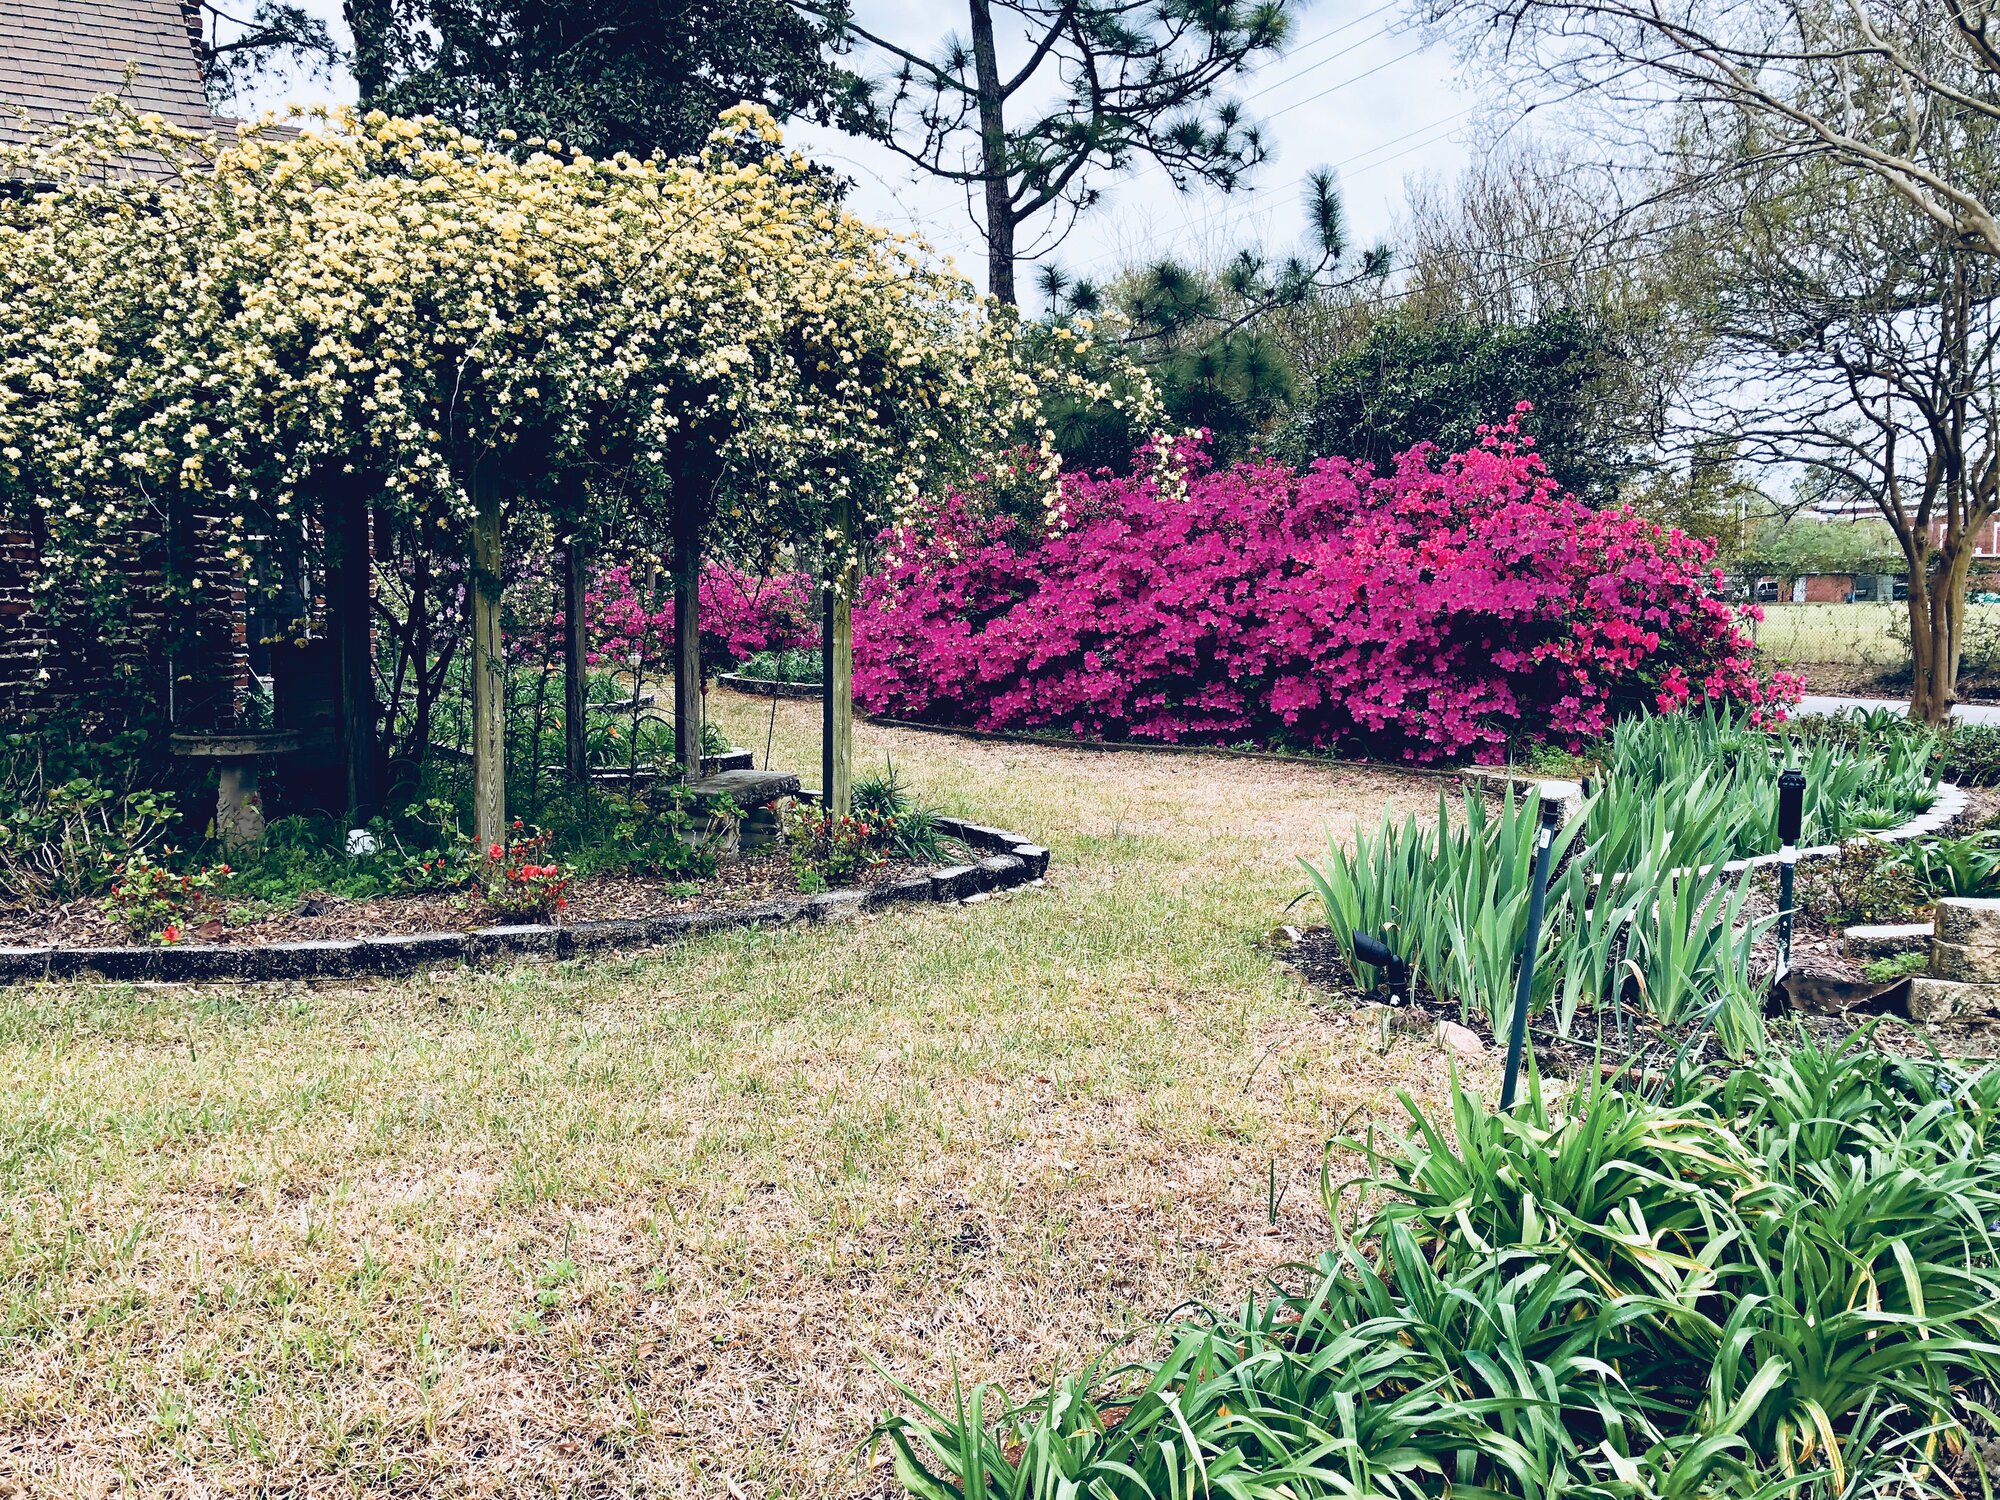 Seen is the fifth garden on the annual Sumter Spring Garden Tour.